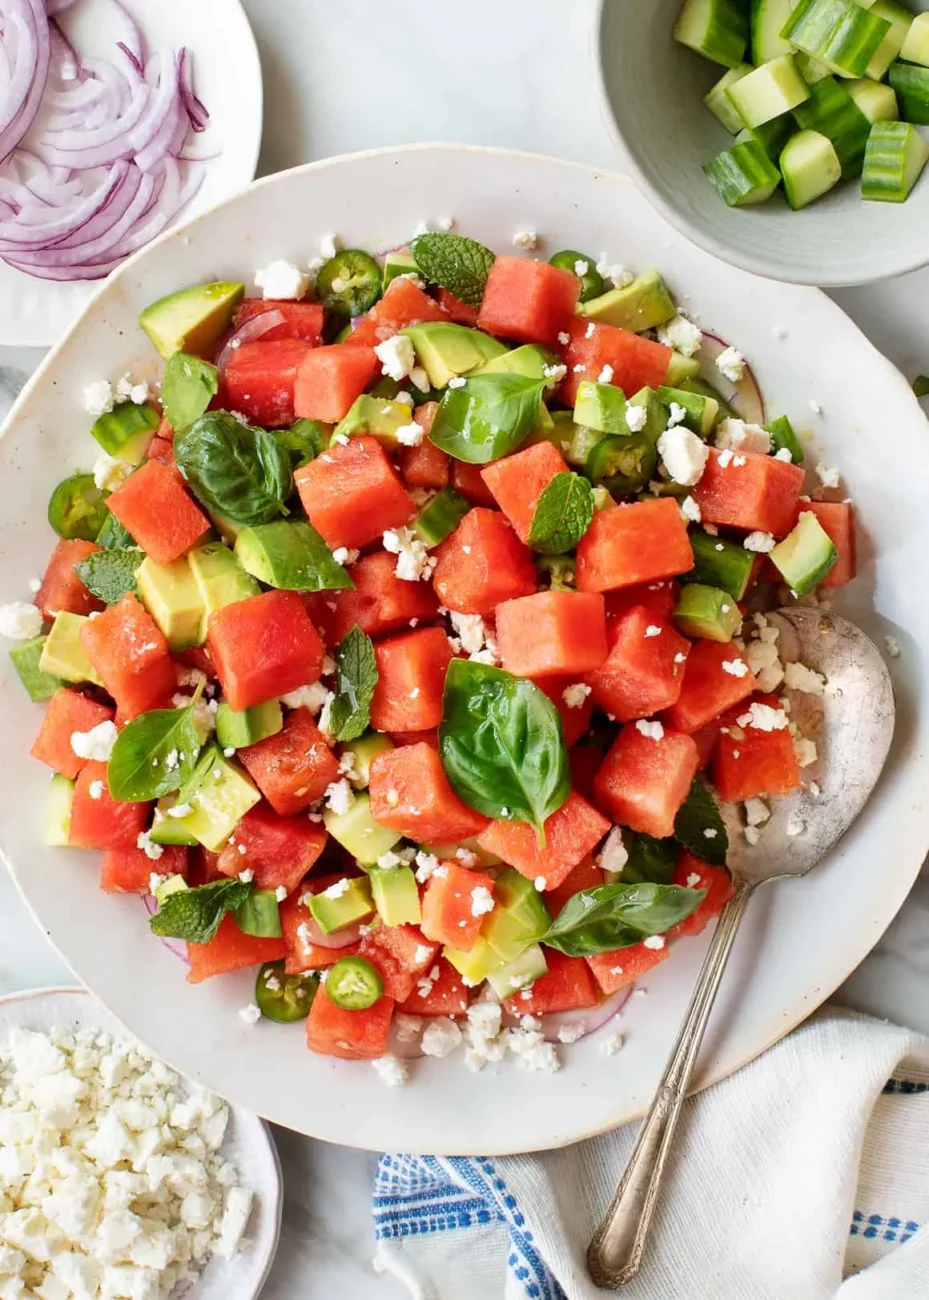 Refreshing Weight Watchers Friendly Watermelon Fruit Salad Recipe